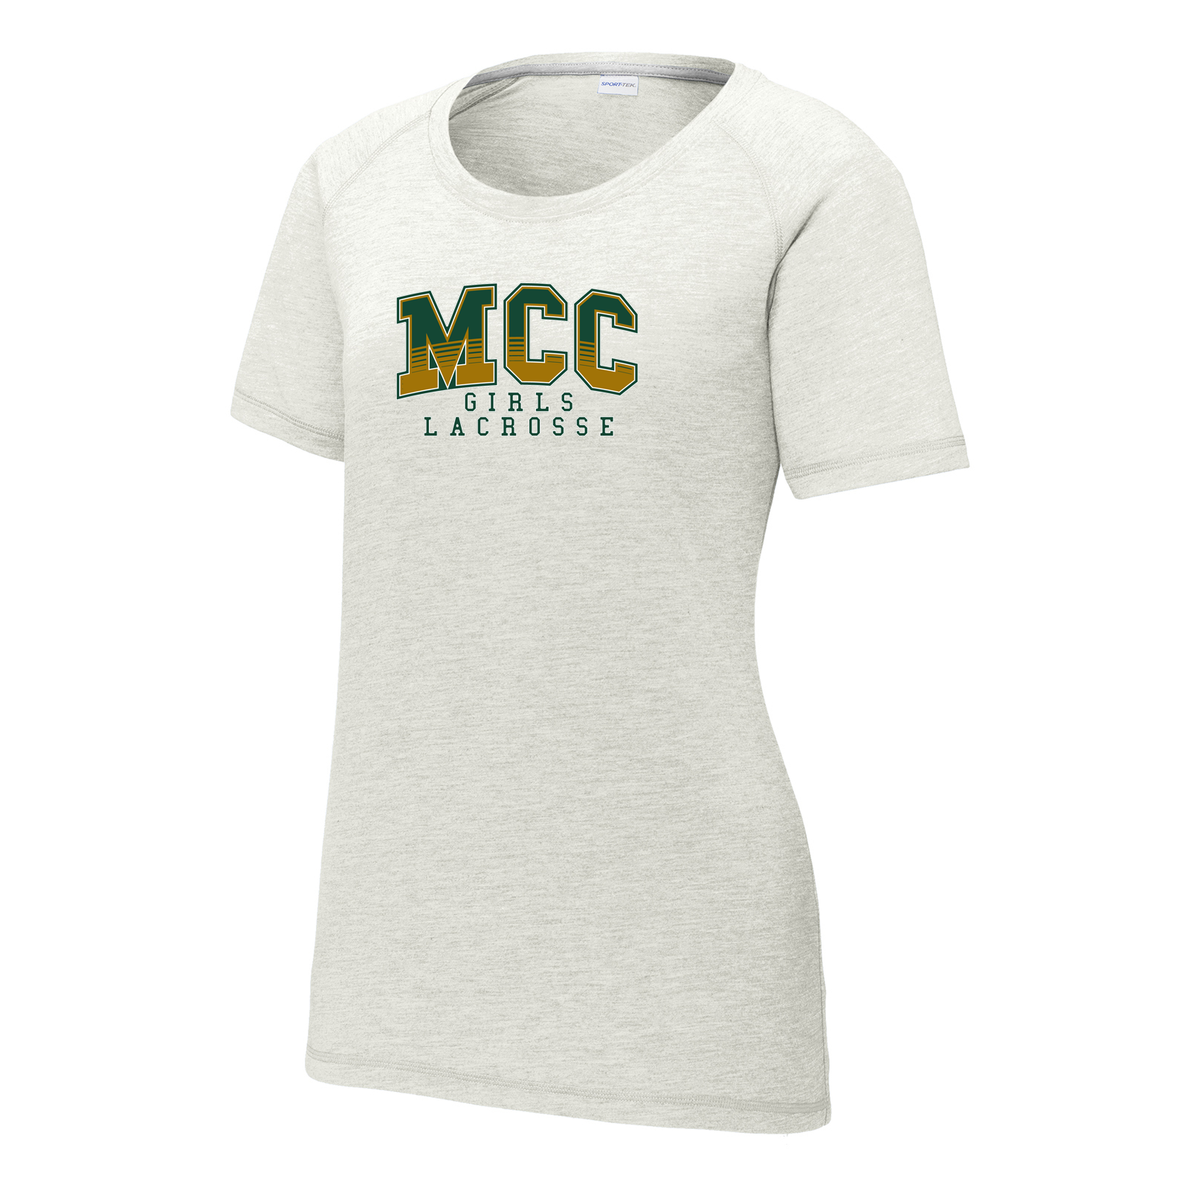 MCC Lacrosse  Women's Raglan CottonTouch